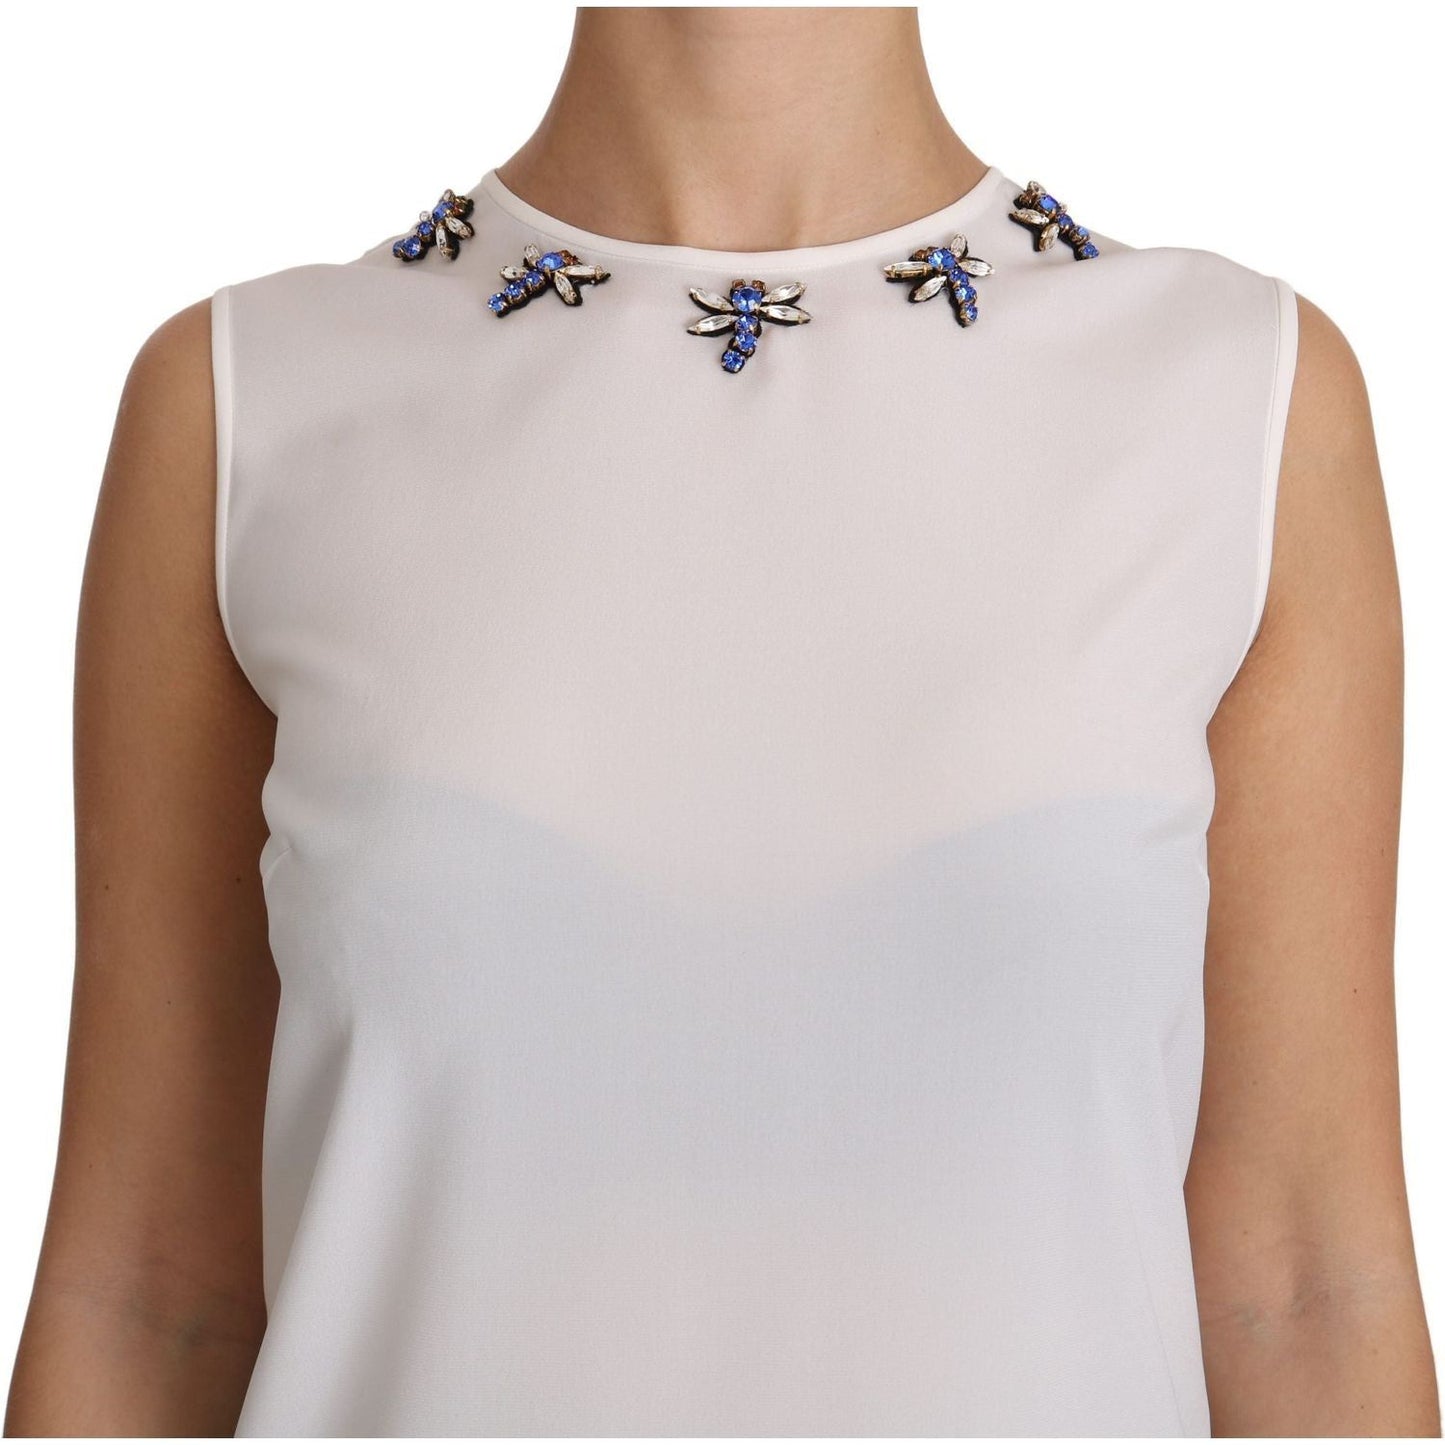 Dolce & Gabbana Fairy Tale Crystal-Embellished Silk Blouse white-silk-embellished-crystal-dragonfly-top 650094-white-silk-embellished-crystal-dragonfly-top-1.jpg